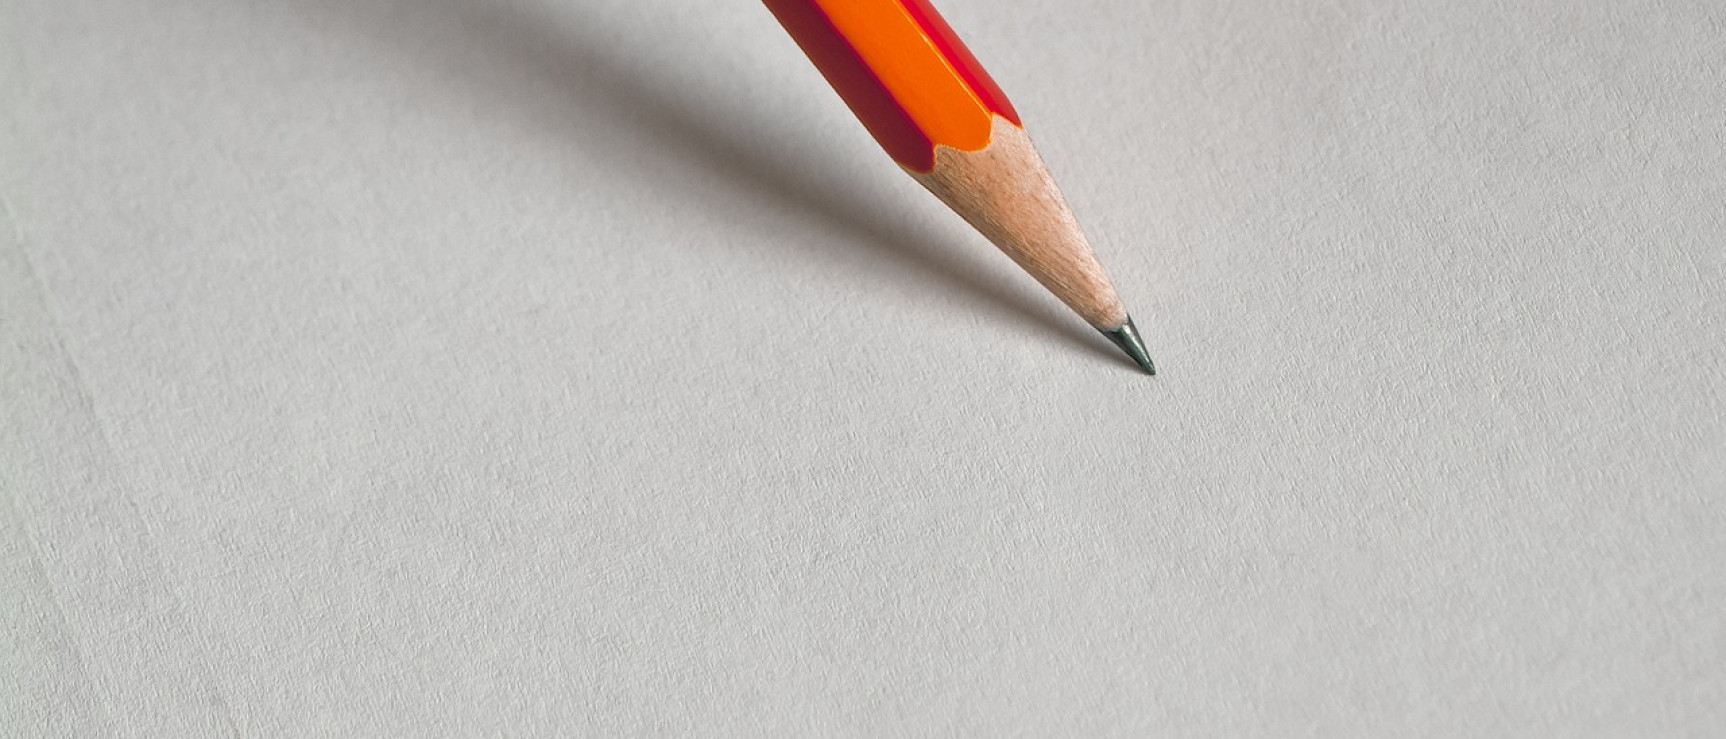 Lápiz y cuaderno (foto: pixabay)